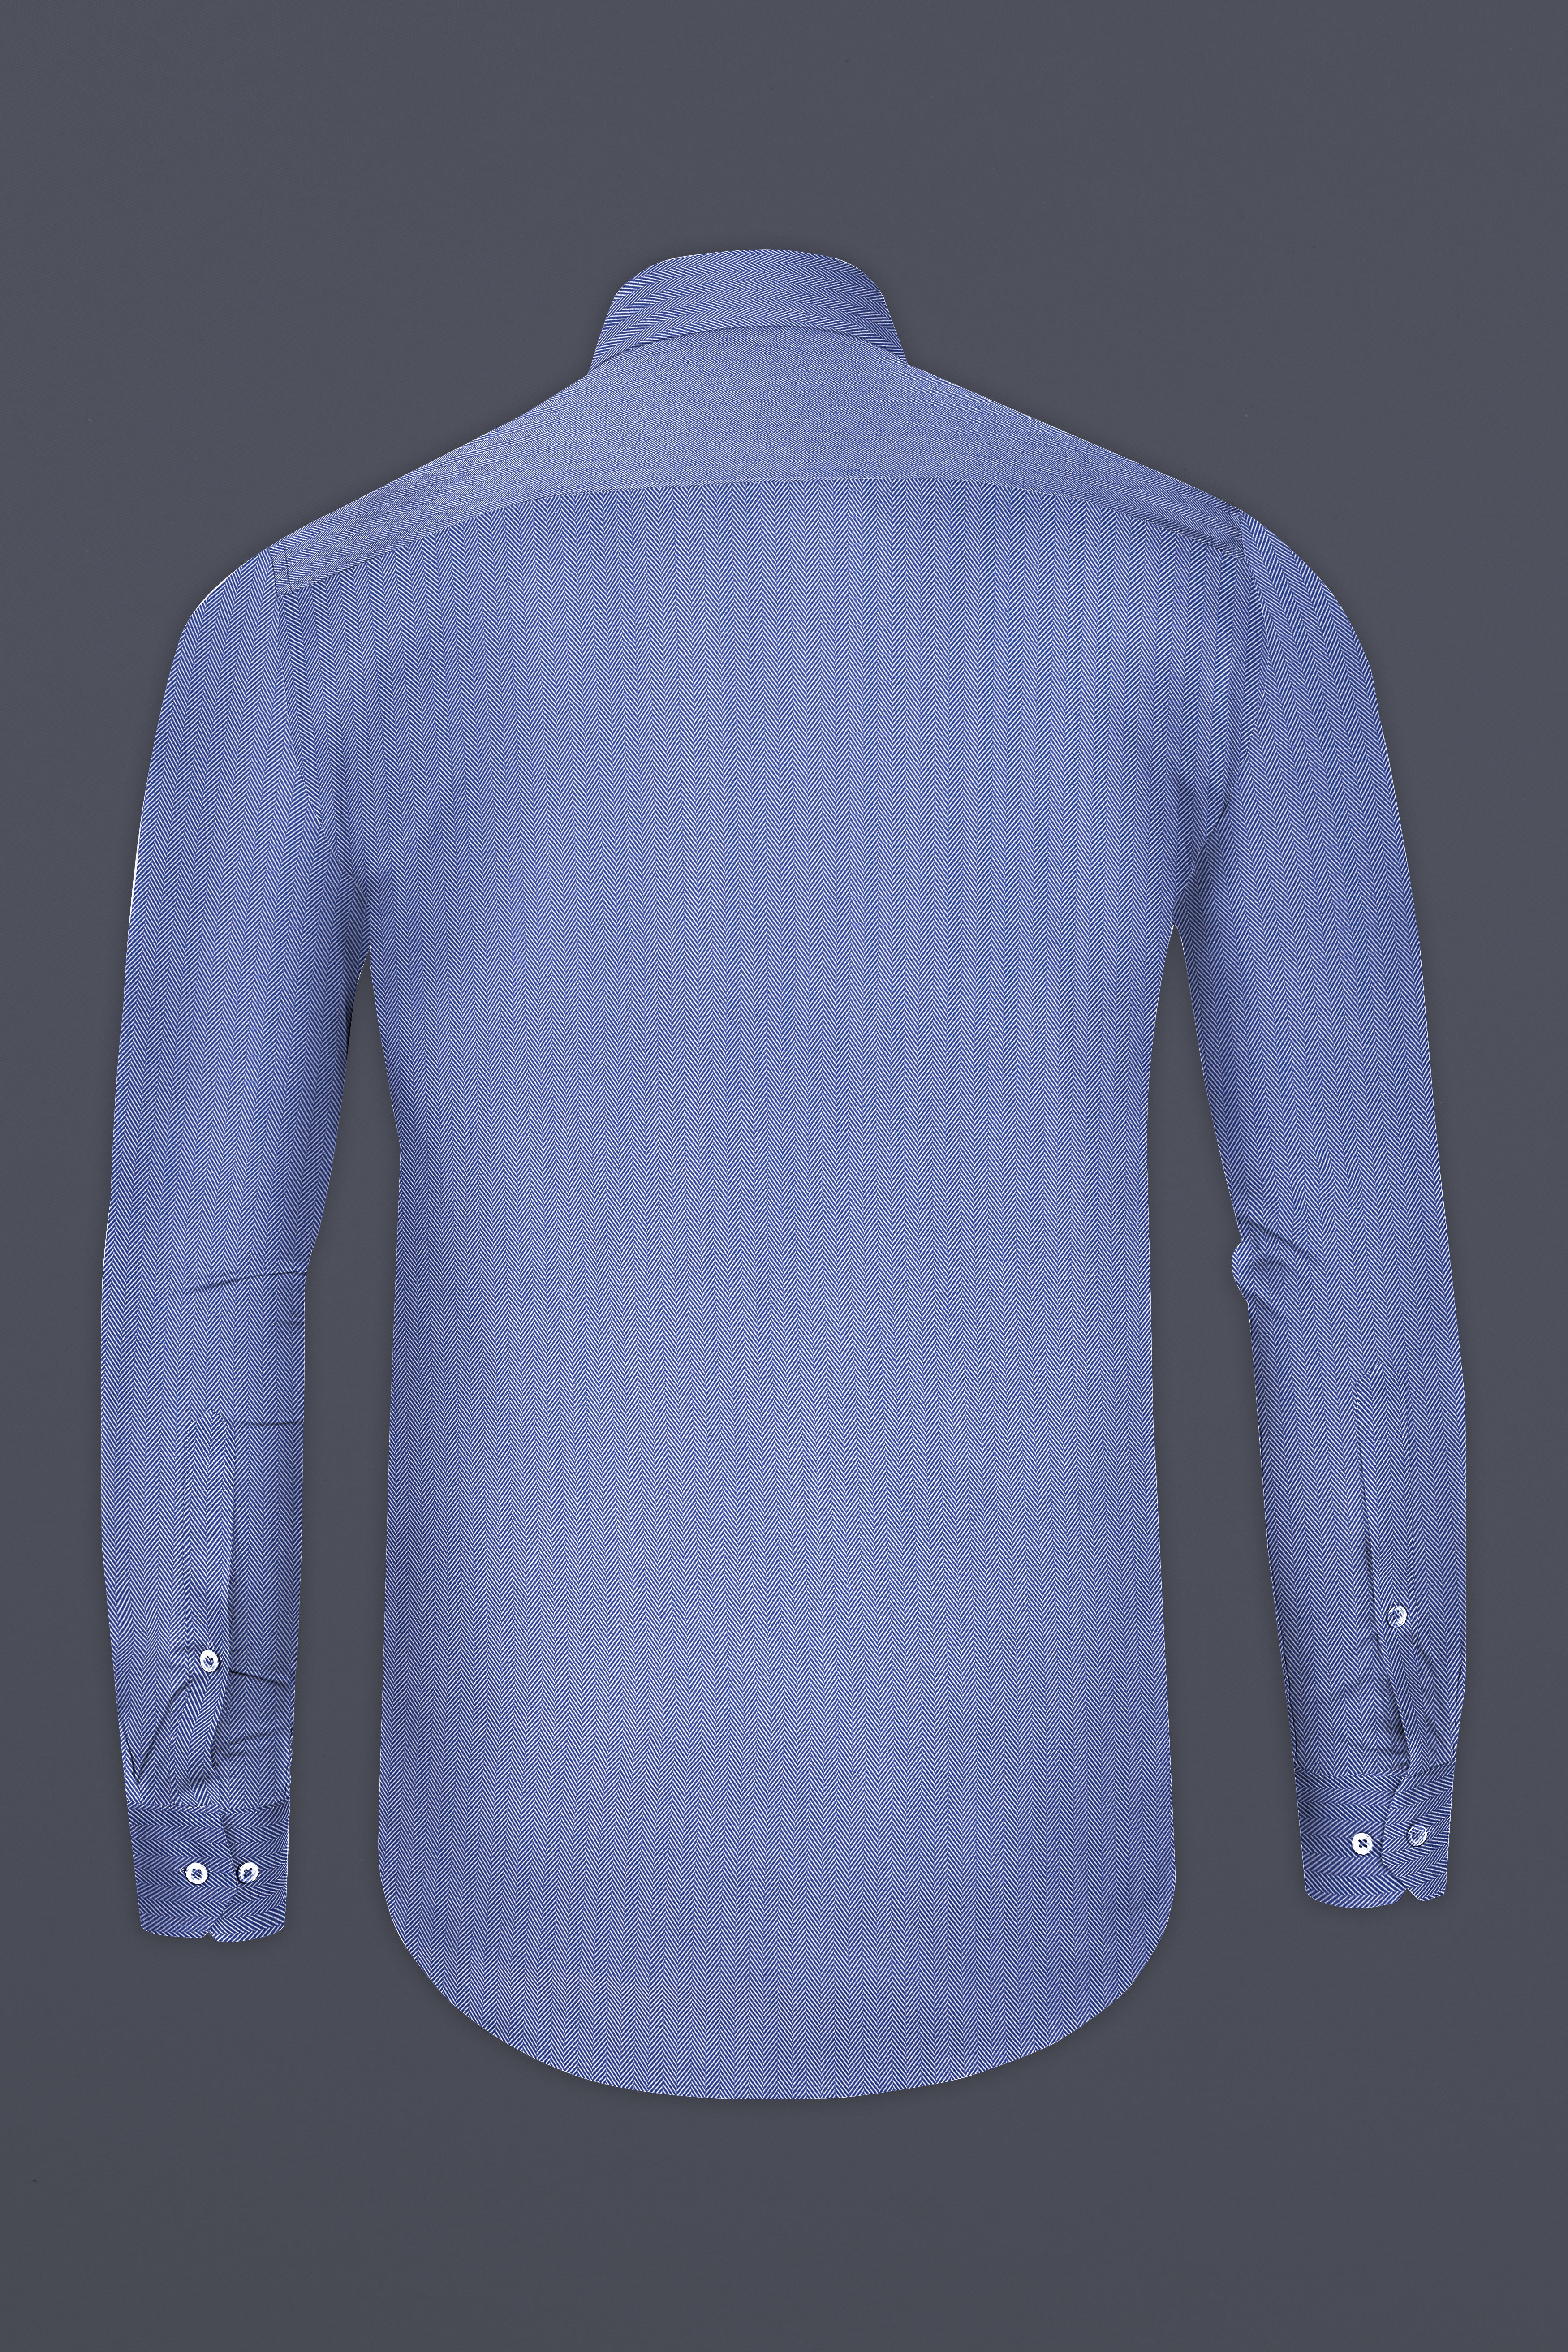 Wild Blue Yonder Subtle Striped Stretchable Herringbone Shirt